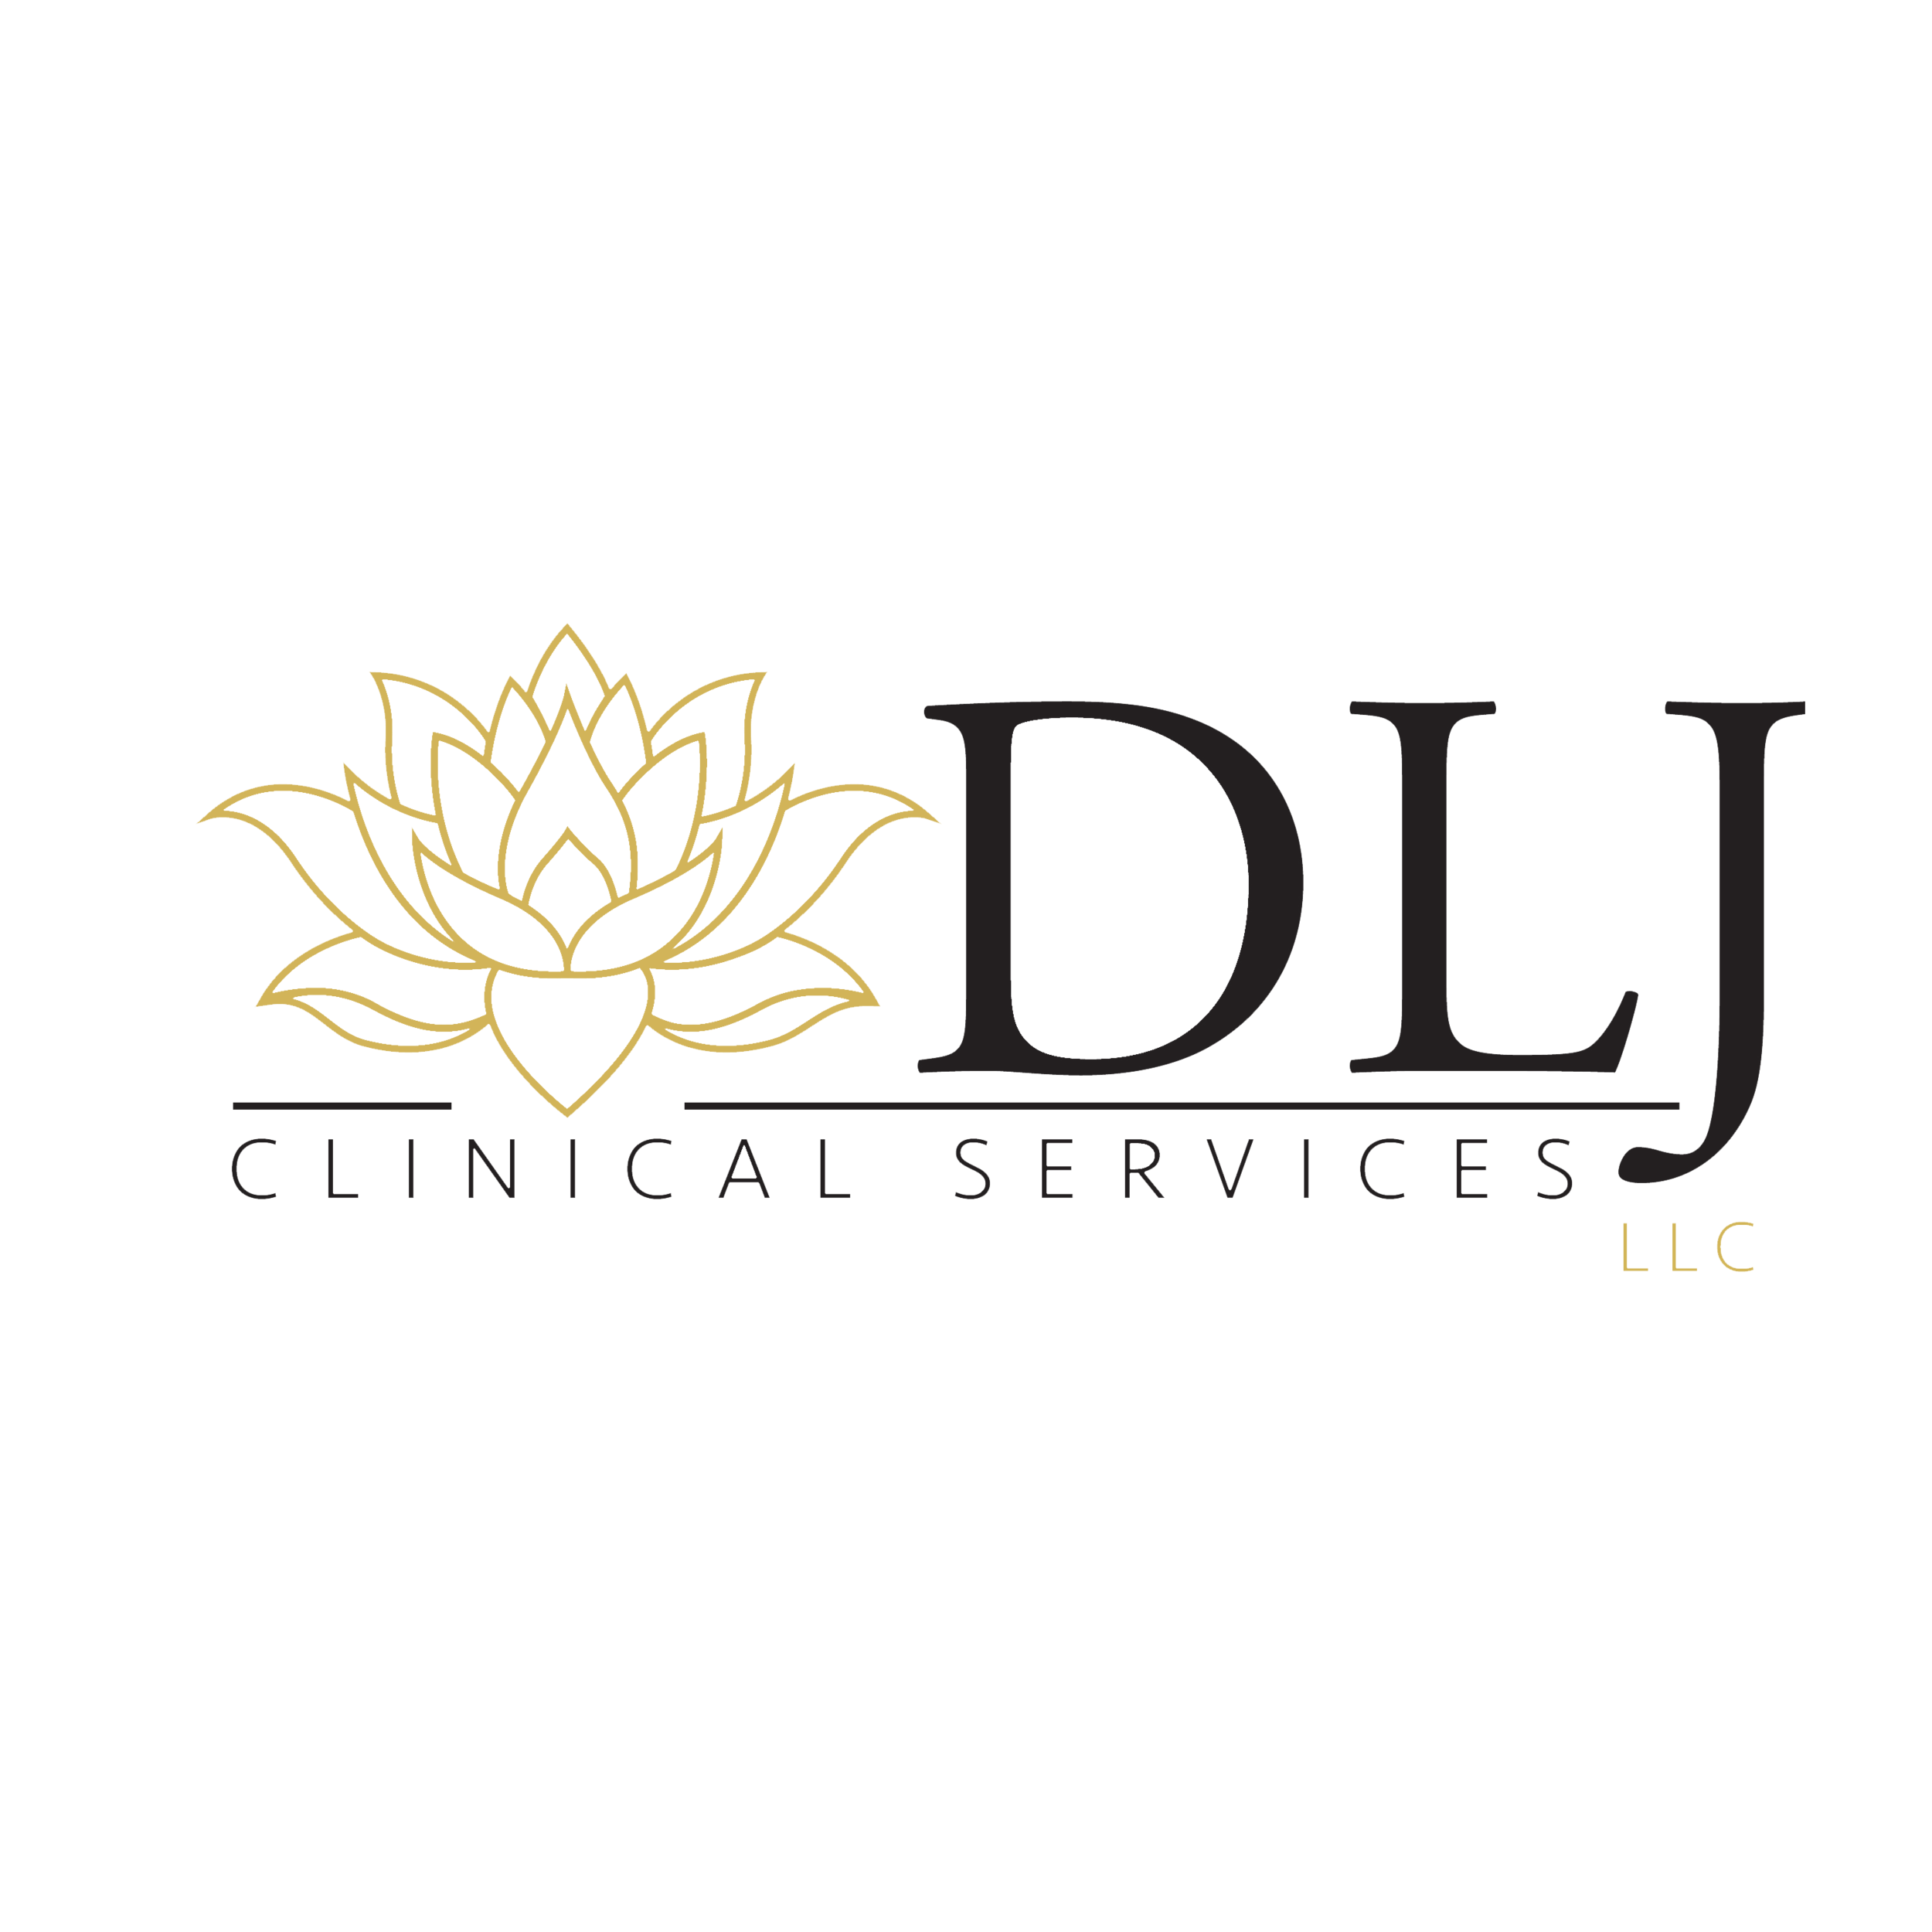 DLJ Clinical Services, LLC.